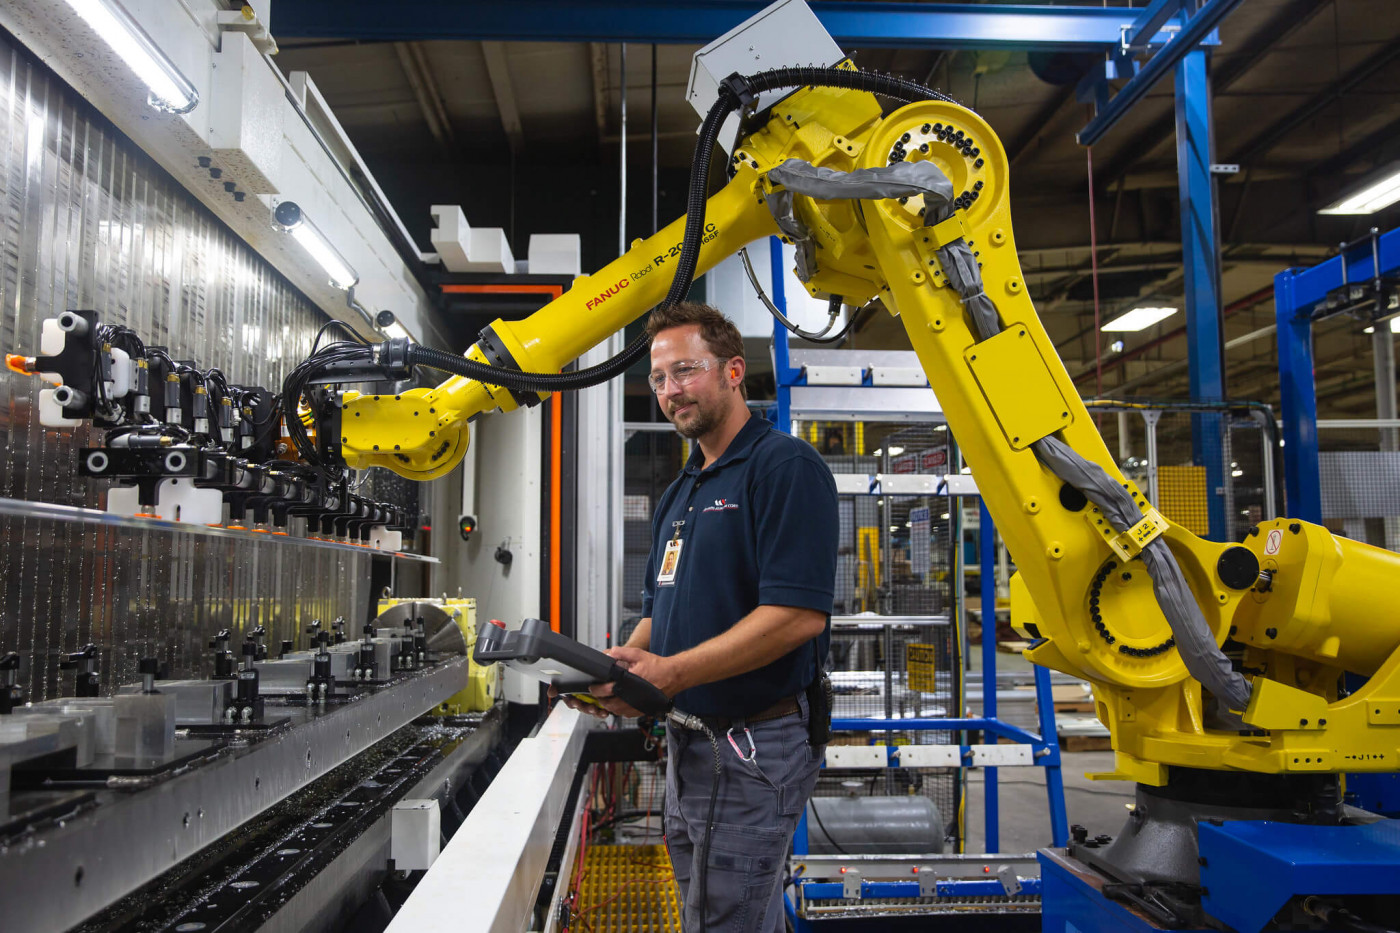 automation and robotics on display